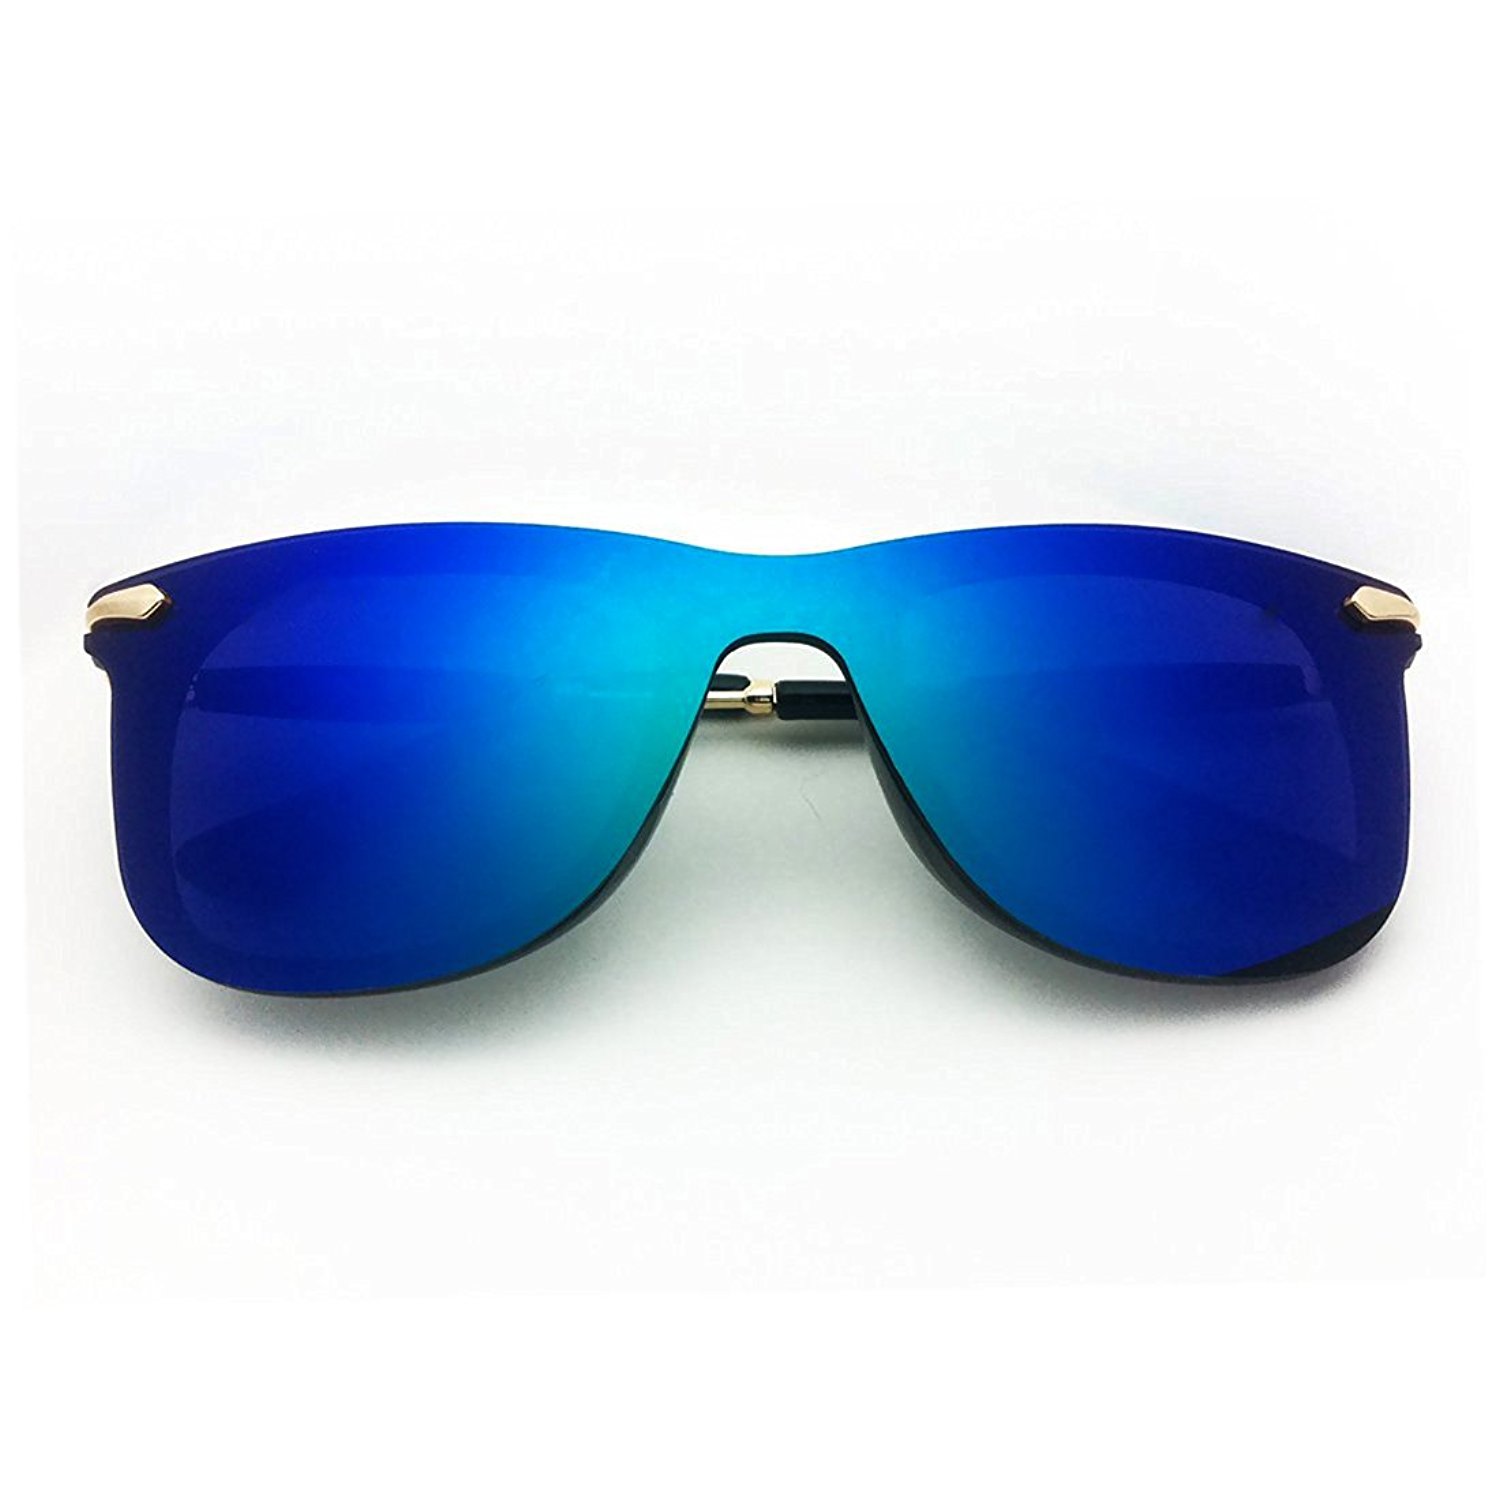 Buy 29K Blue Mirrored Wayfarer Sunglasses Online @ ₹1299 from ShopClues